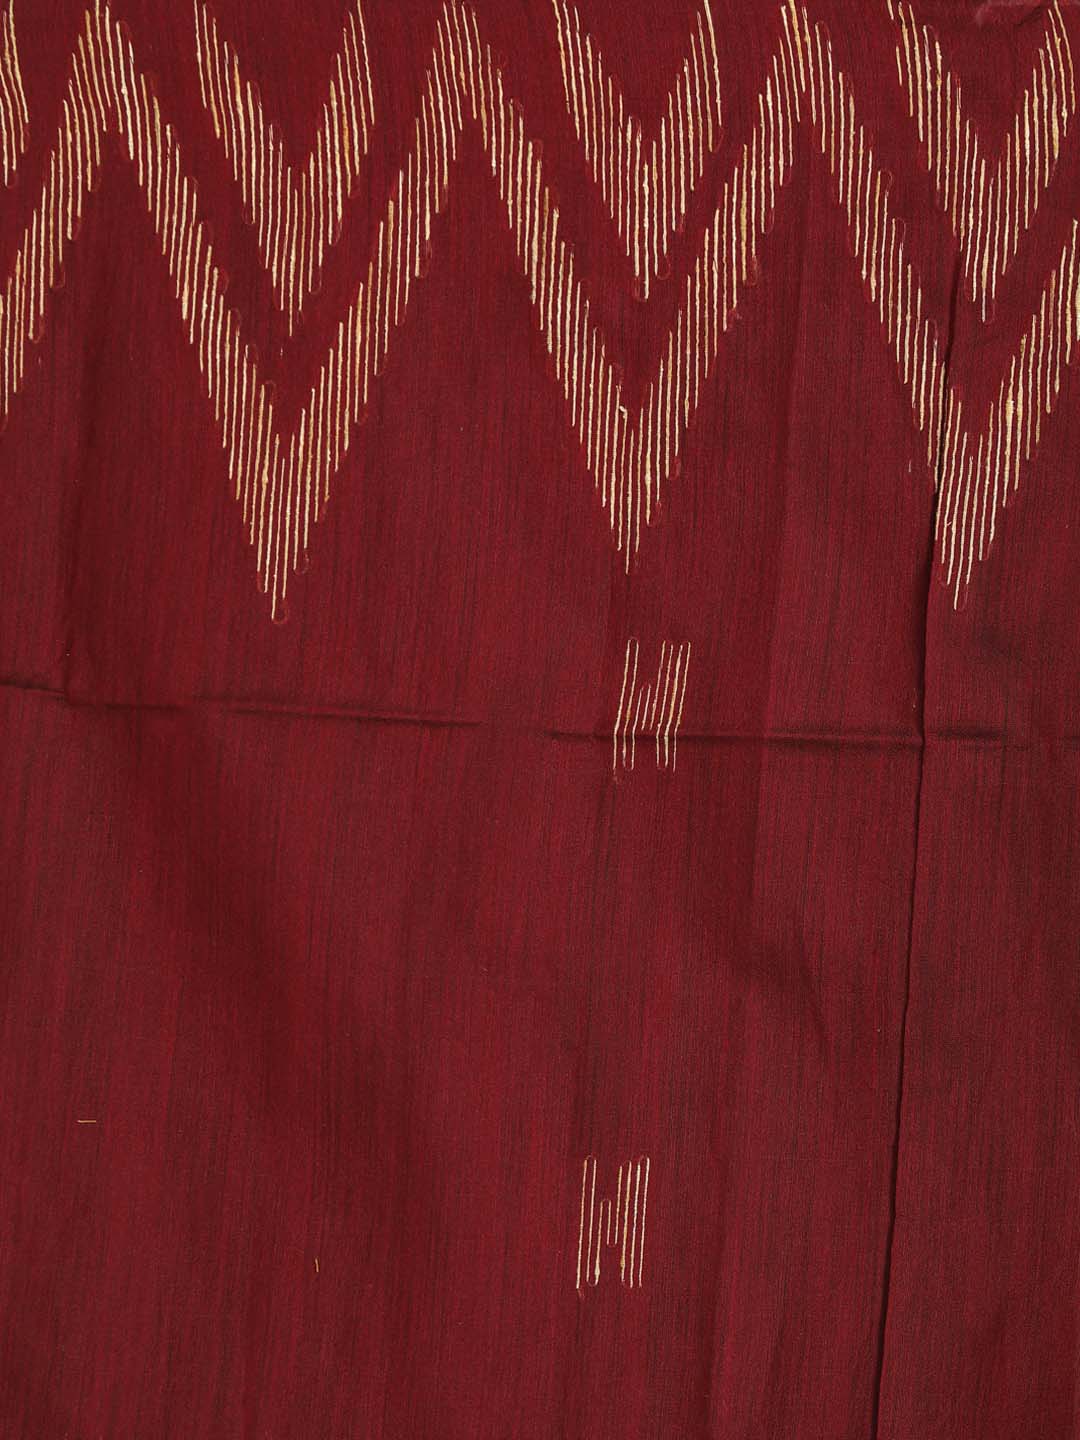 Indethnic Maroon Bengal Handloom Cotton Blend Work Saree - Saree Detail View